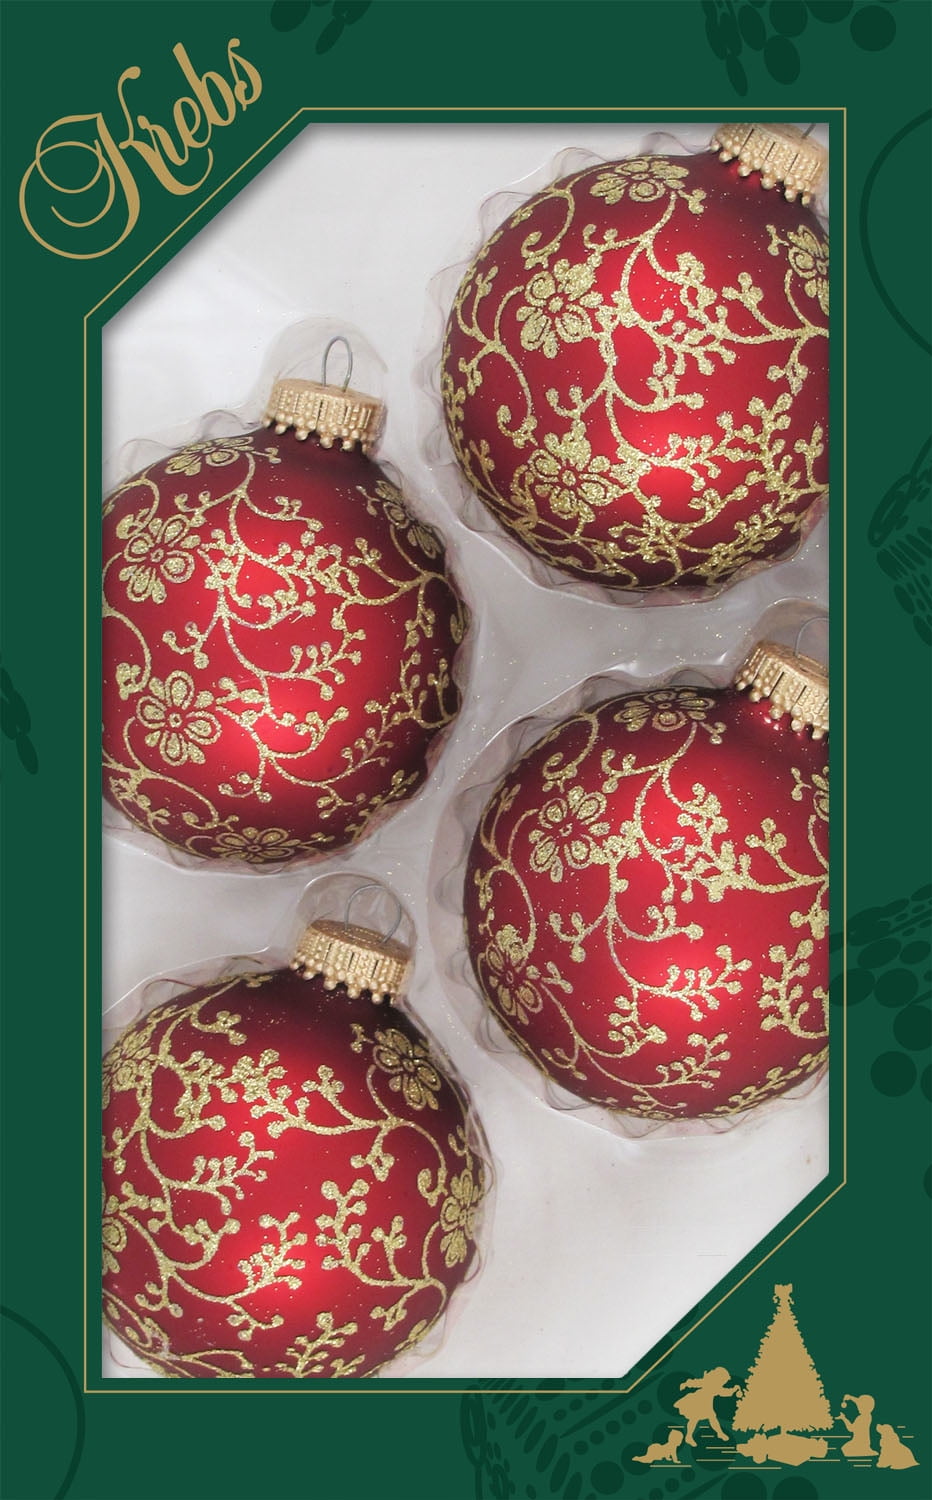 ALAZA Bloody Eyeball Halloween Christmas Ball Ornaments Set for Holiday Wedding Party Xmas Tree Bauble 3.1 inch 6